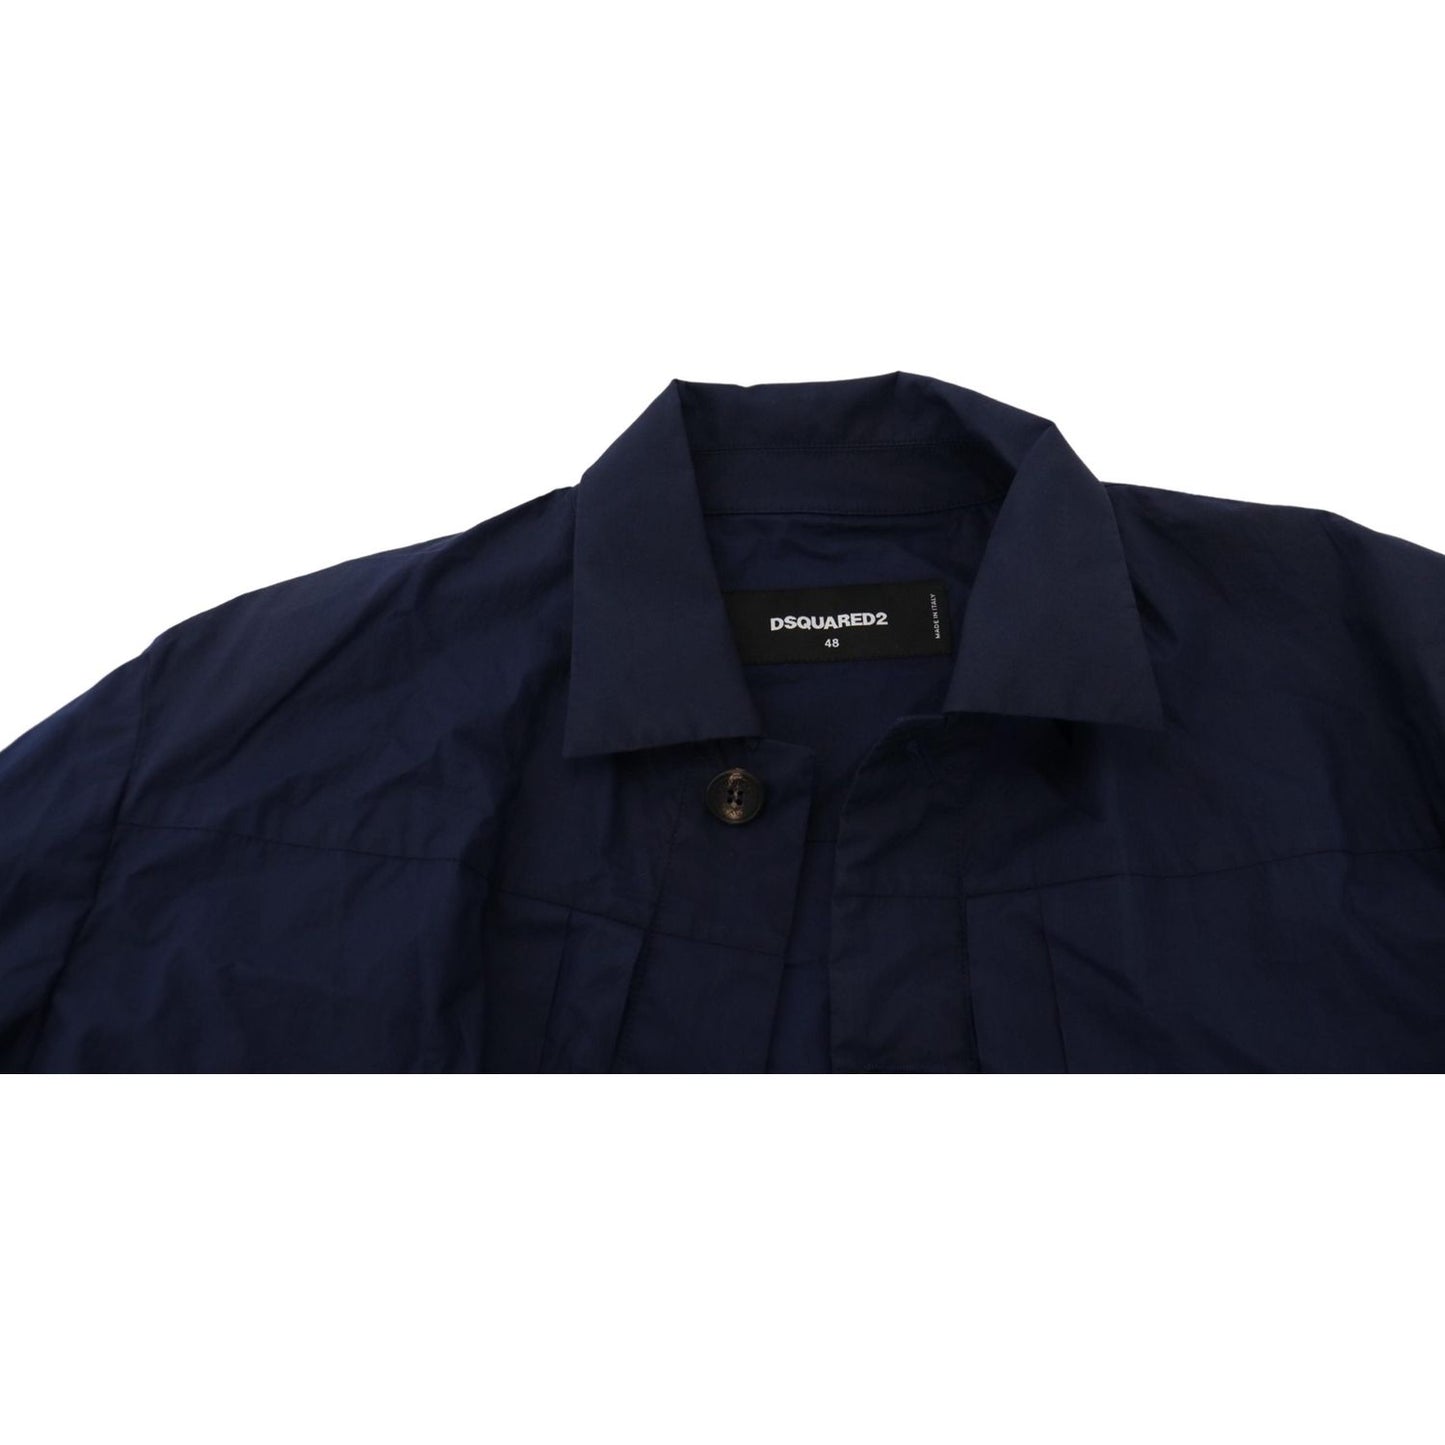 Dsquared² Svelte Dark Blue Cotton Shirt dark-blue-cotton-collared-long-sleeves-casual-shirt IMG_7211-scaled-381b211b-6e7.jpg